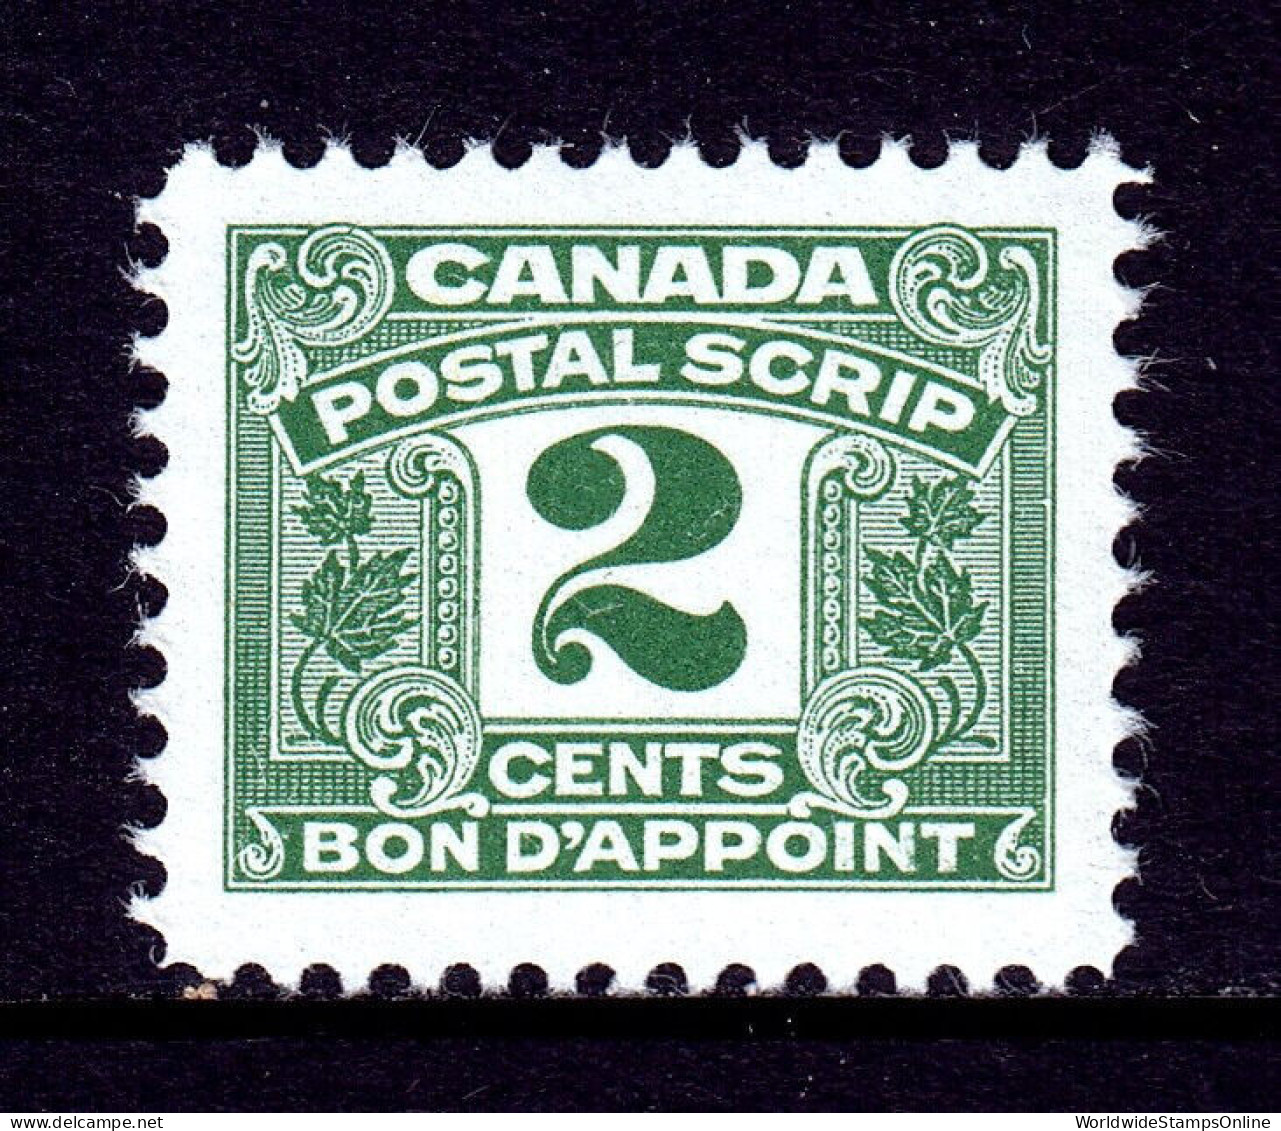 CANADA — VAN DAM FPS42 — 2¢ THIRD ISSUE POSTAL SCRIPT — MNH — CV $31 - Fiscales